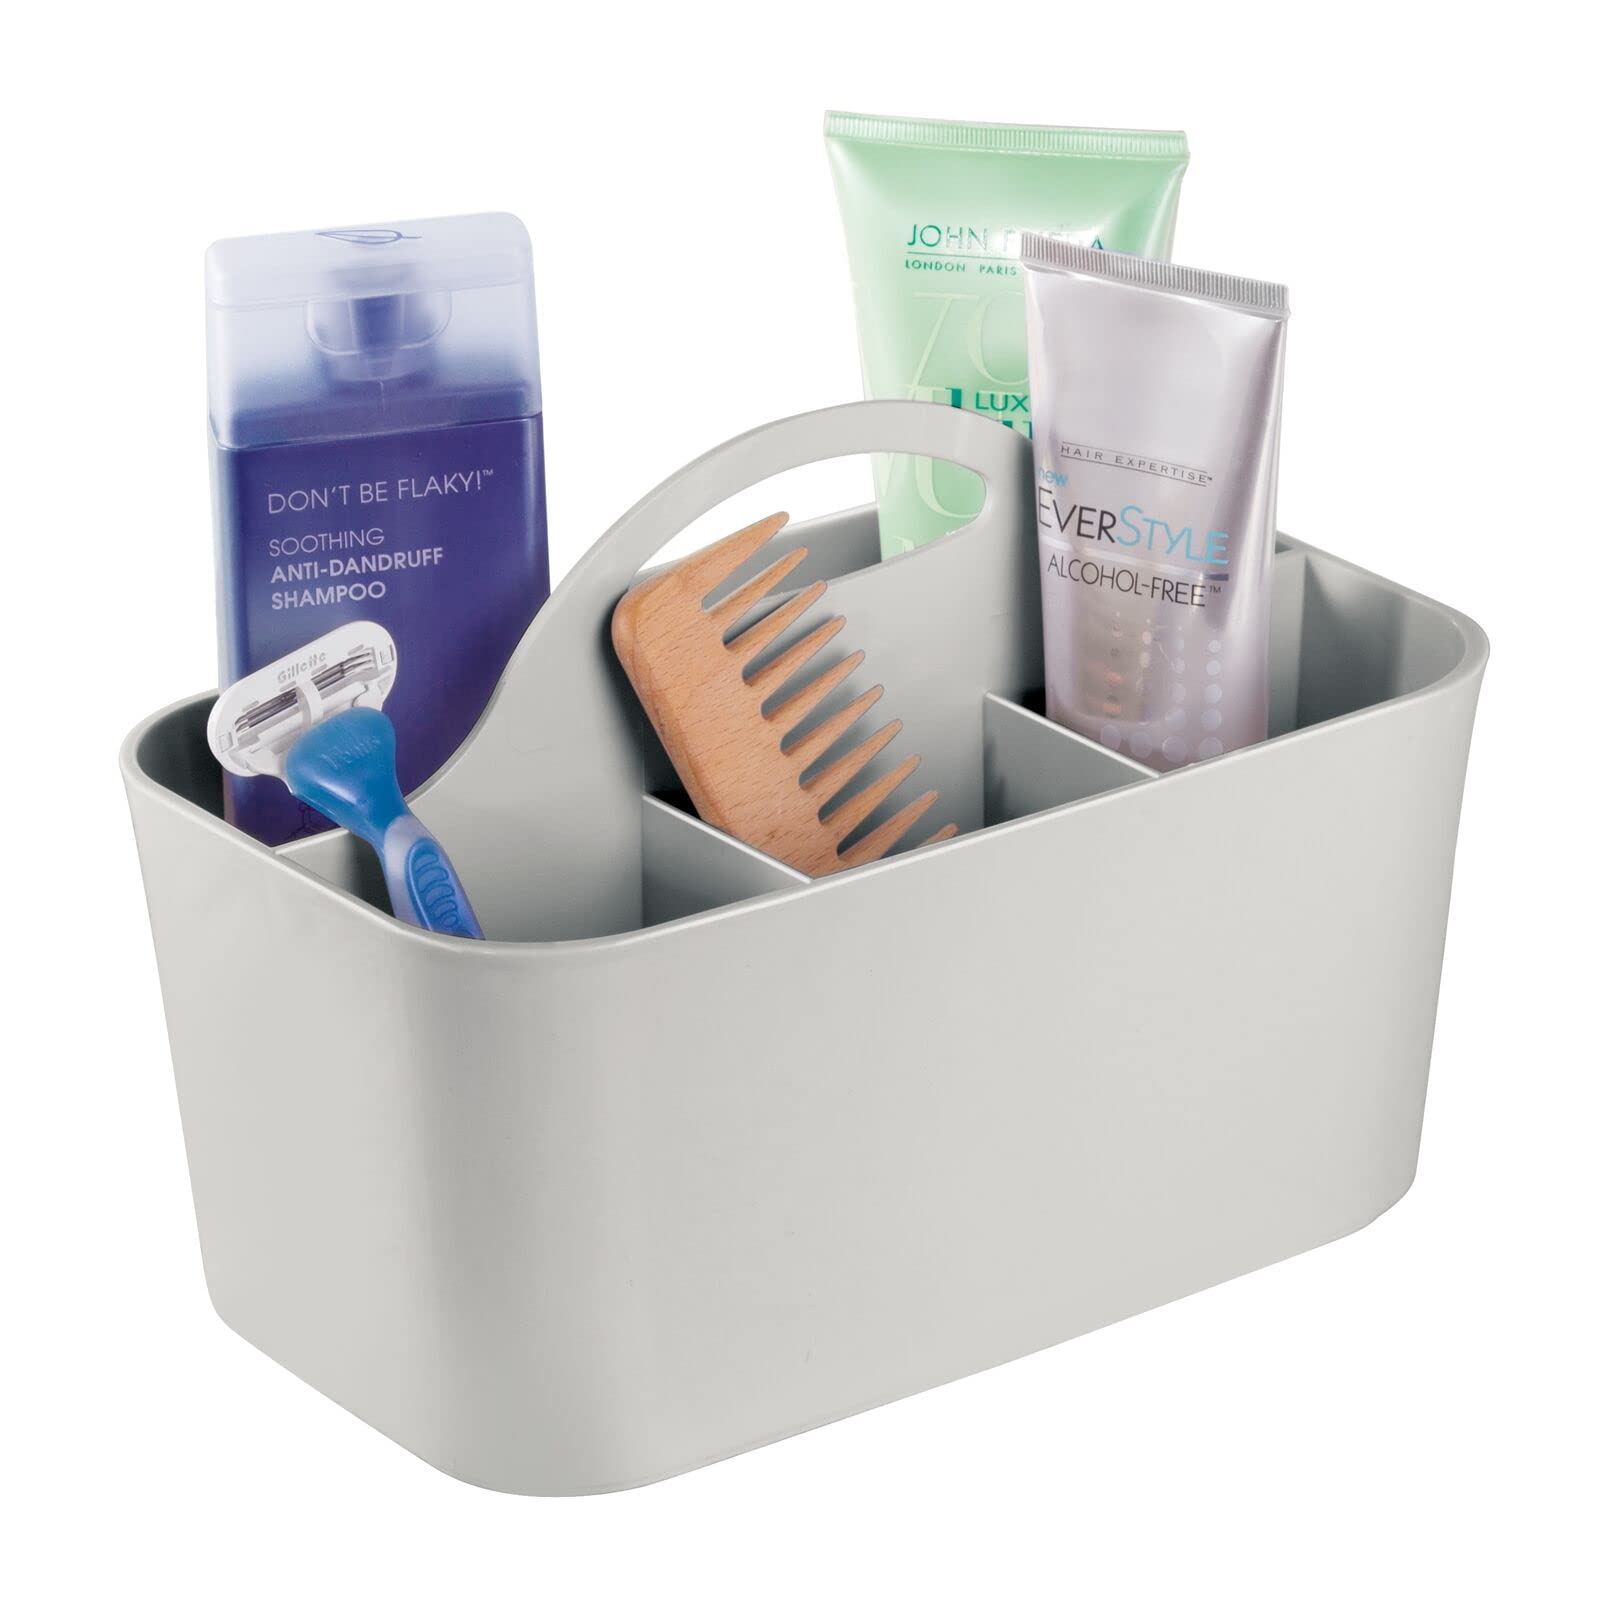 mDesign Bathroom Basket with Handles - Ideal as Cosmetics Organiser, Kitchen Organiser or Hand Towel Holder - Plastic Bath Box - Light Grey